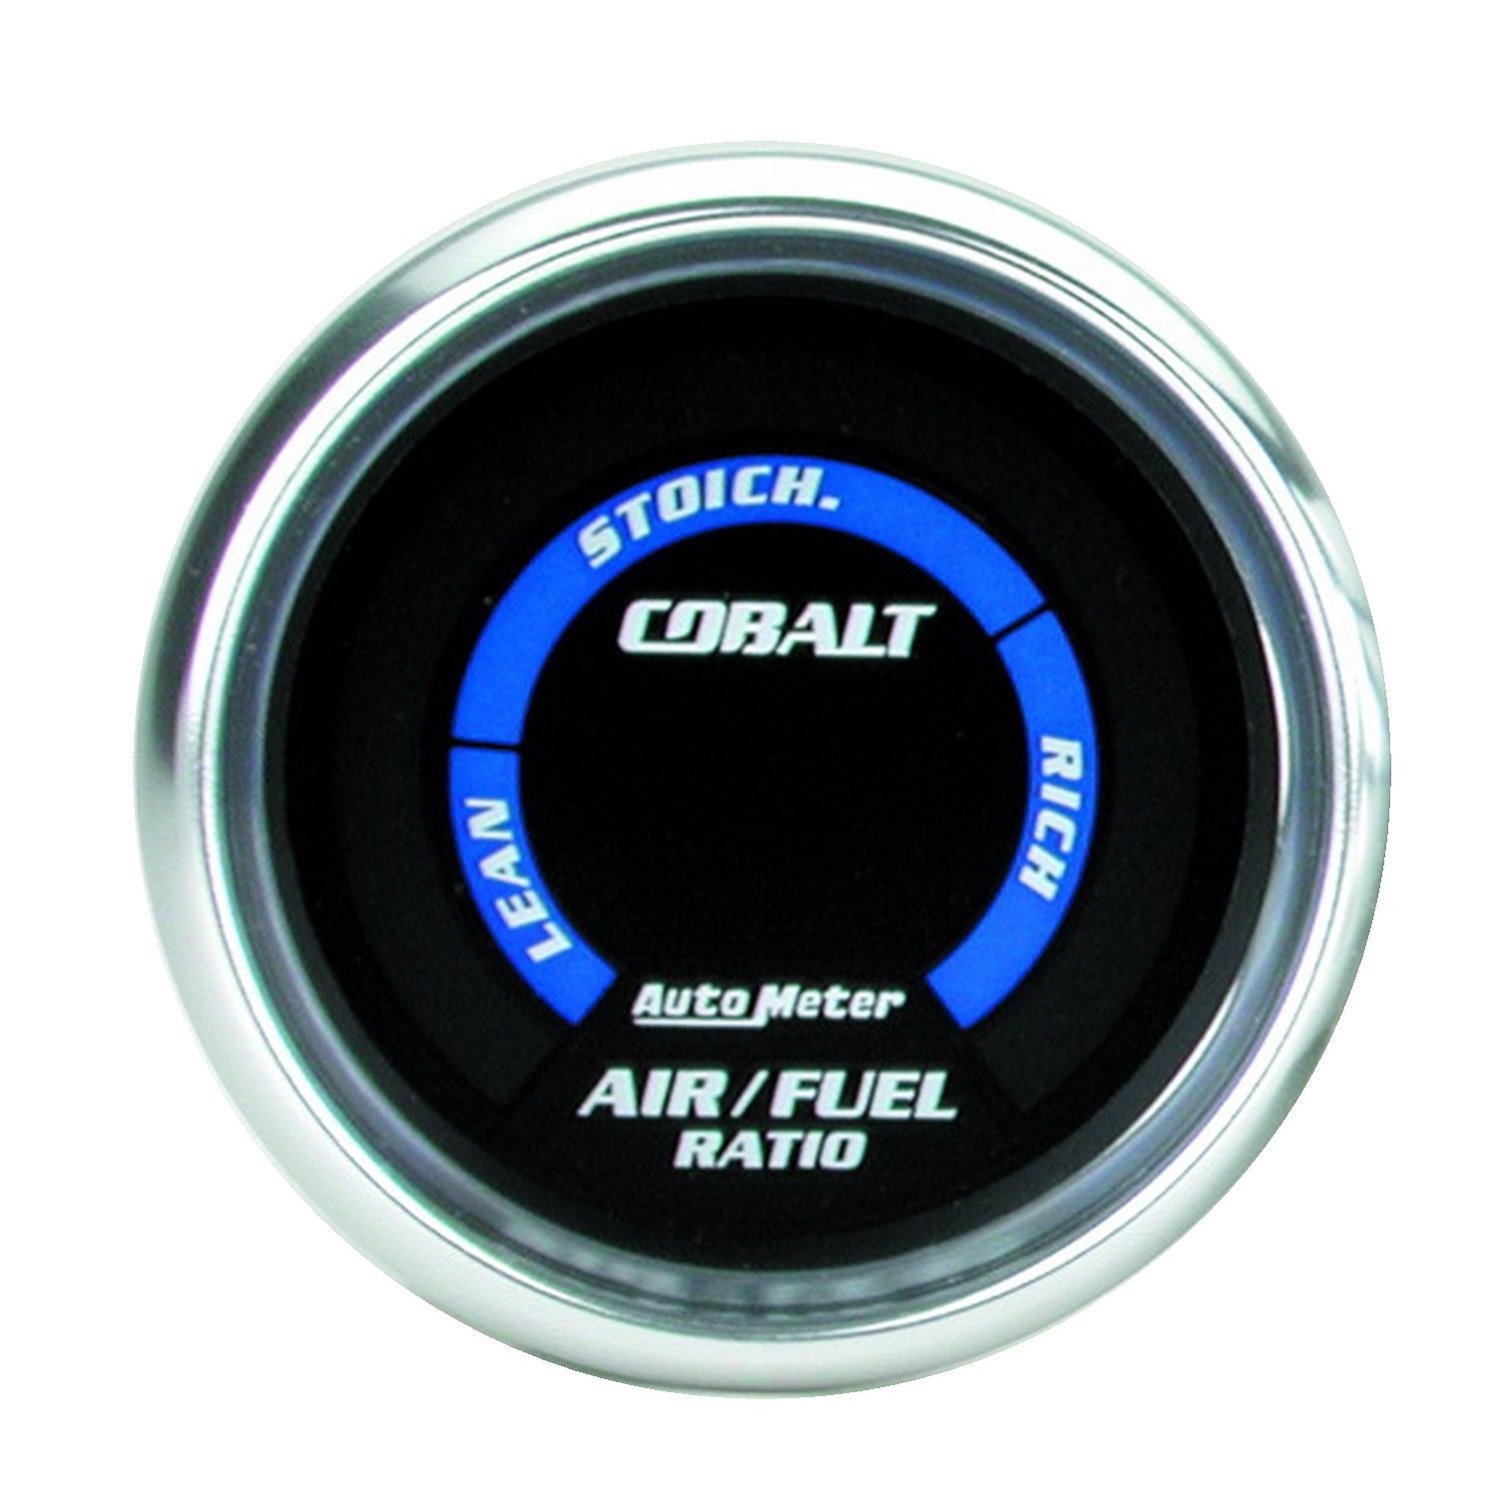 Cobalt Air/Fuel Ratio Gauge 2-1/16", electrical full sweep